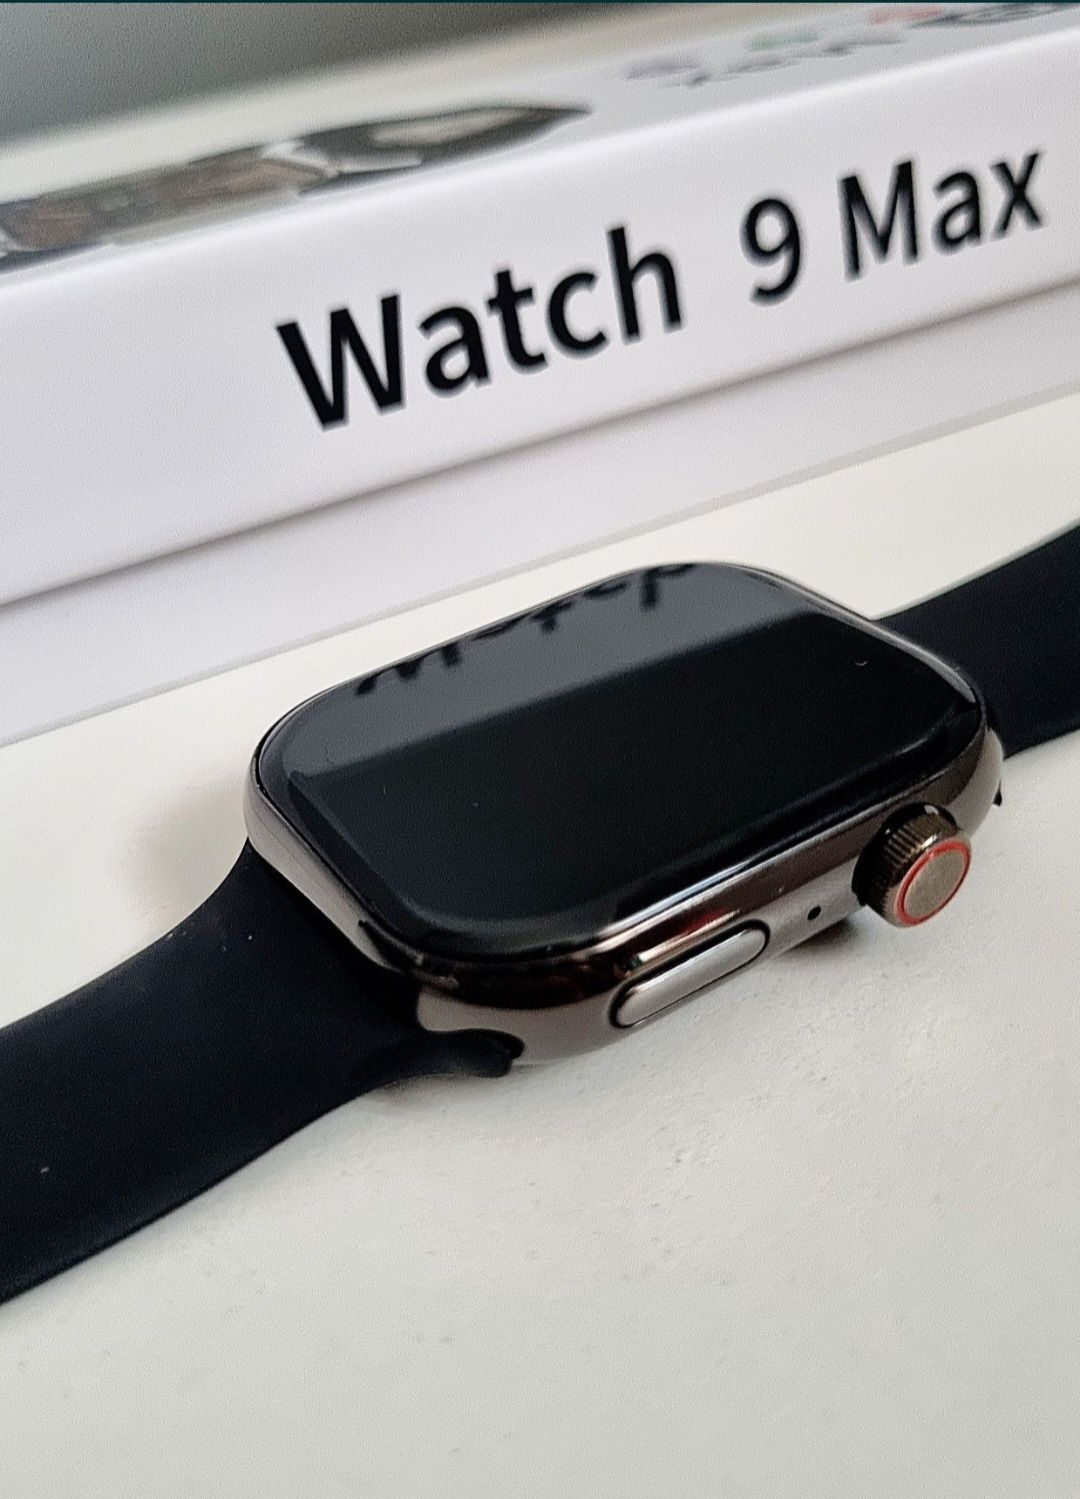 Smartwatch S 9 Max